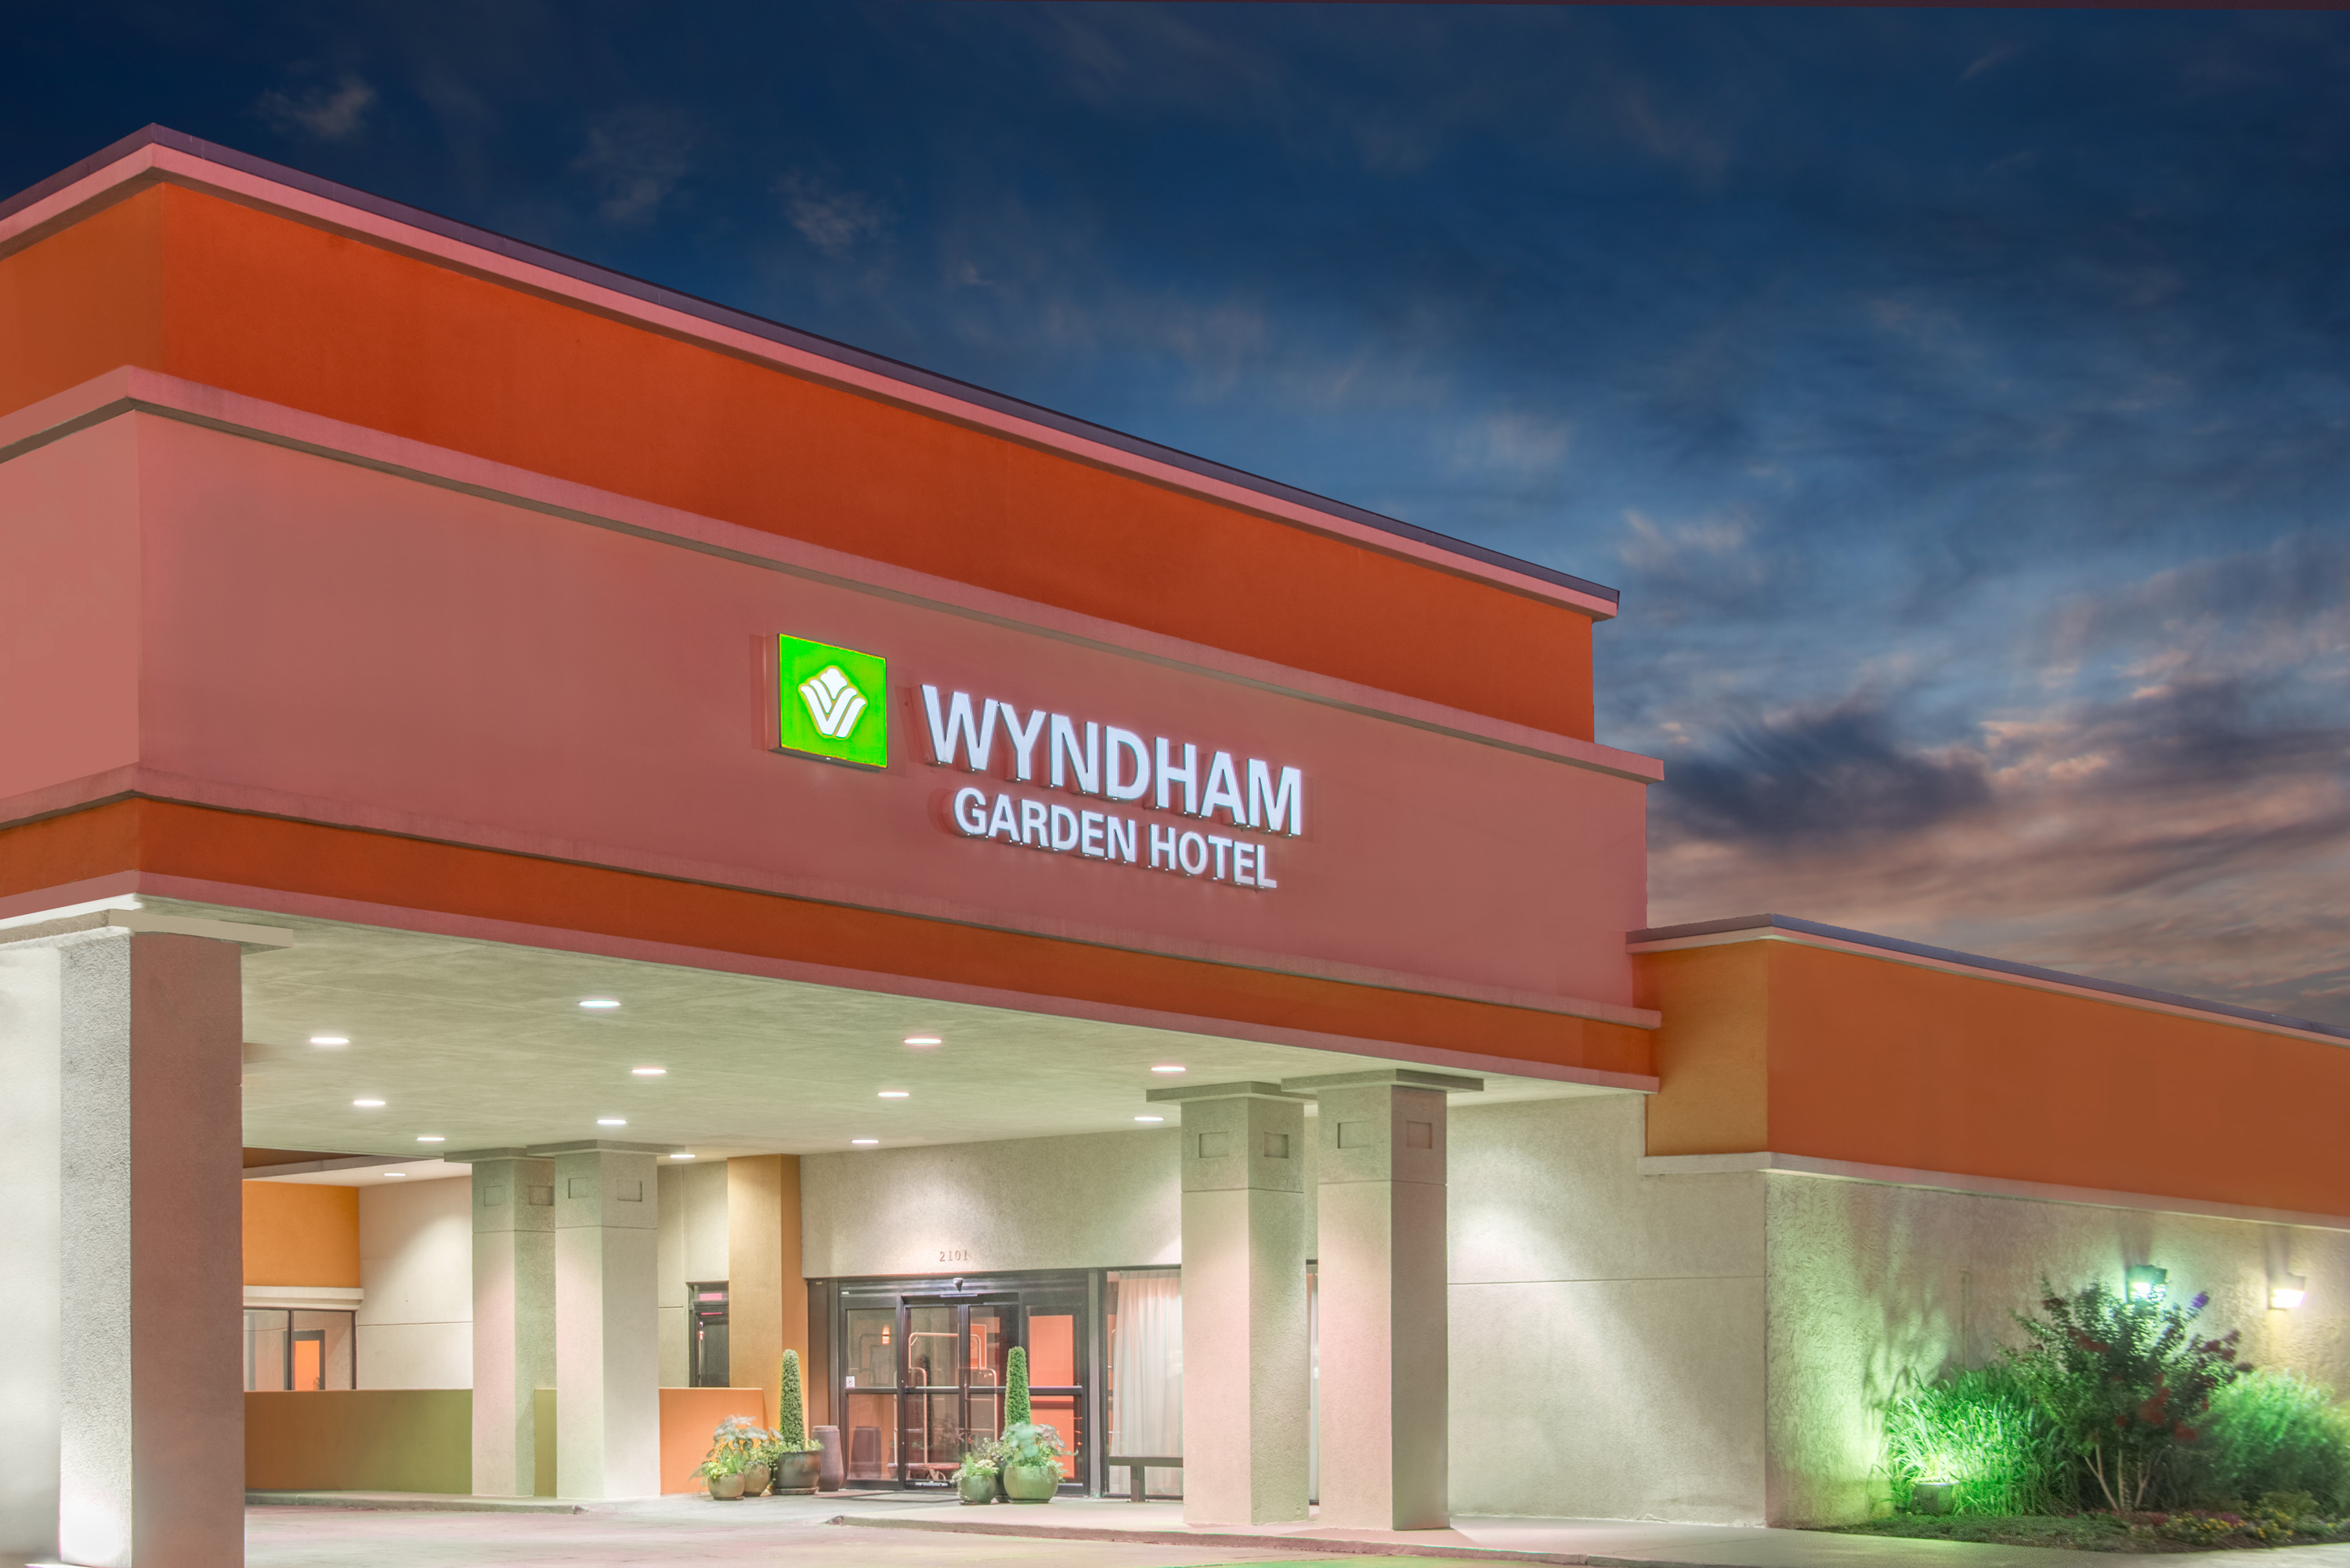 Wyndham Garden Oklahoma City Airport Oklahoma City Ok Hotels